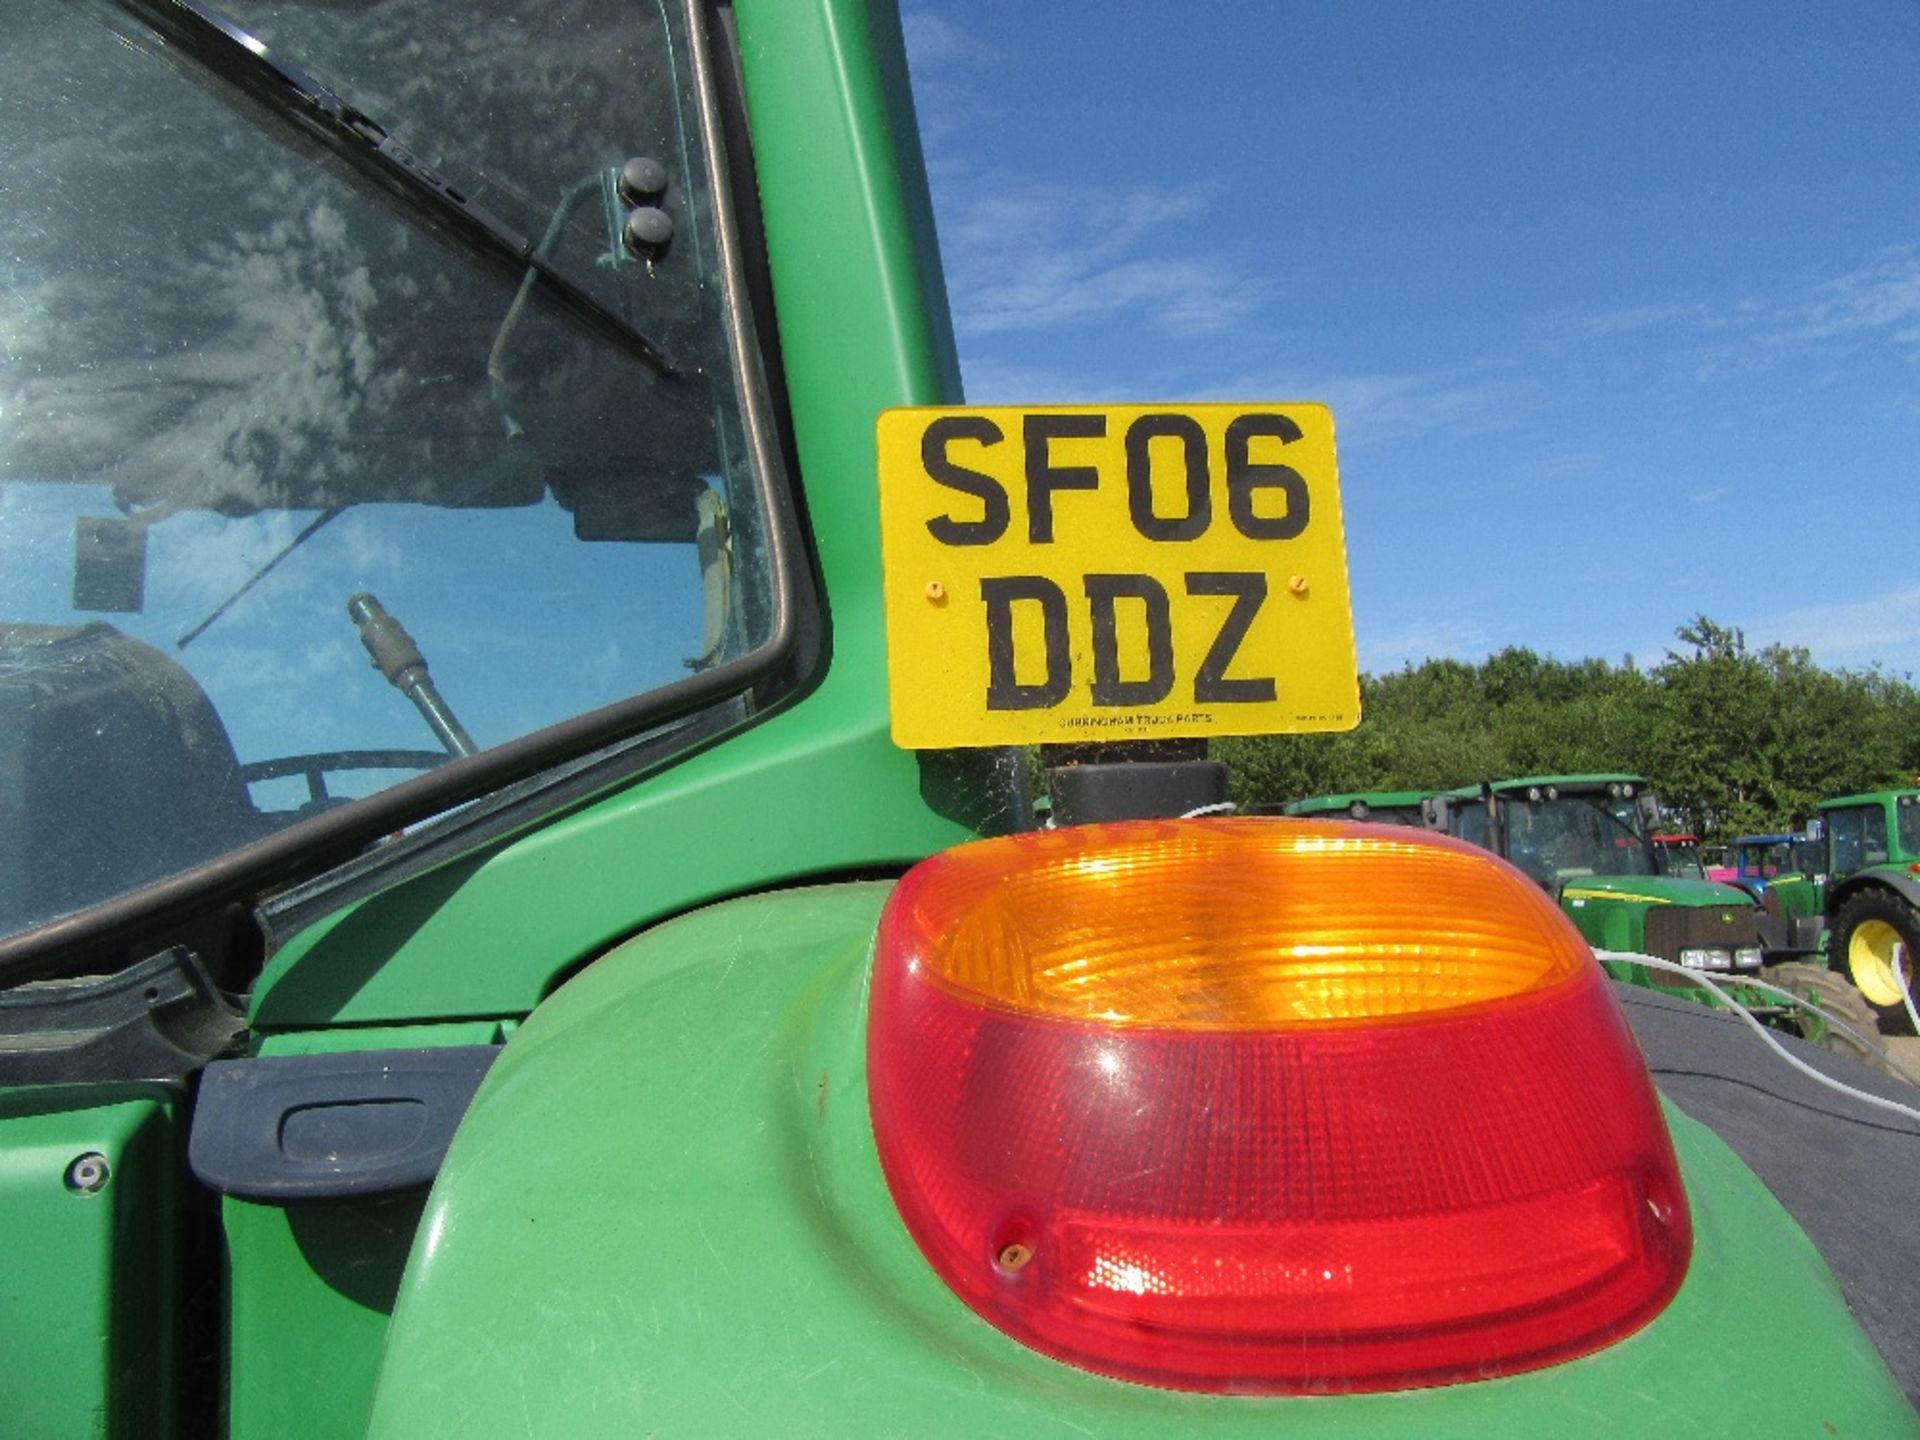 John Deere 6920 Premium TLS Tractor With Air Con. Reg.No. SF06 DDZ. Ser.No.489472 - Image 6 of 12